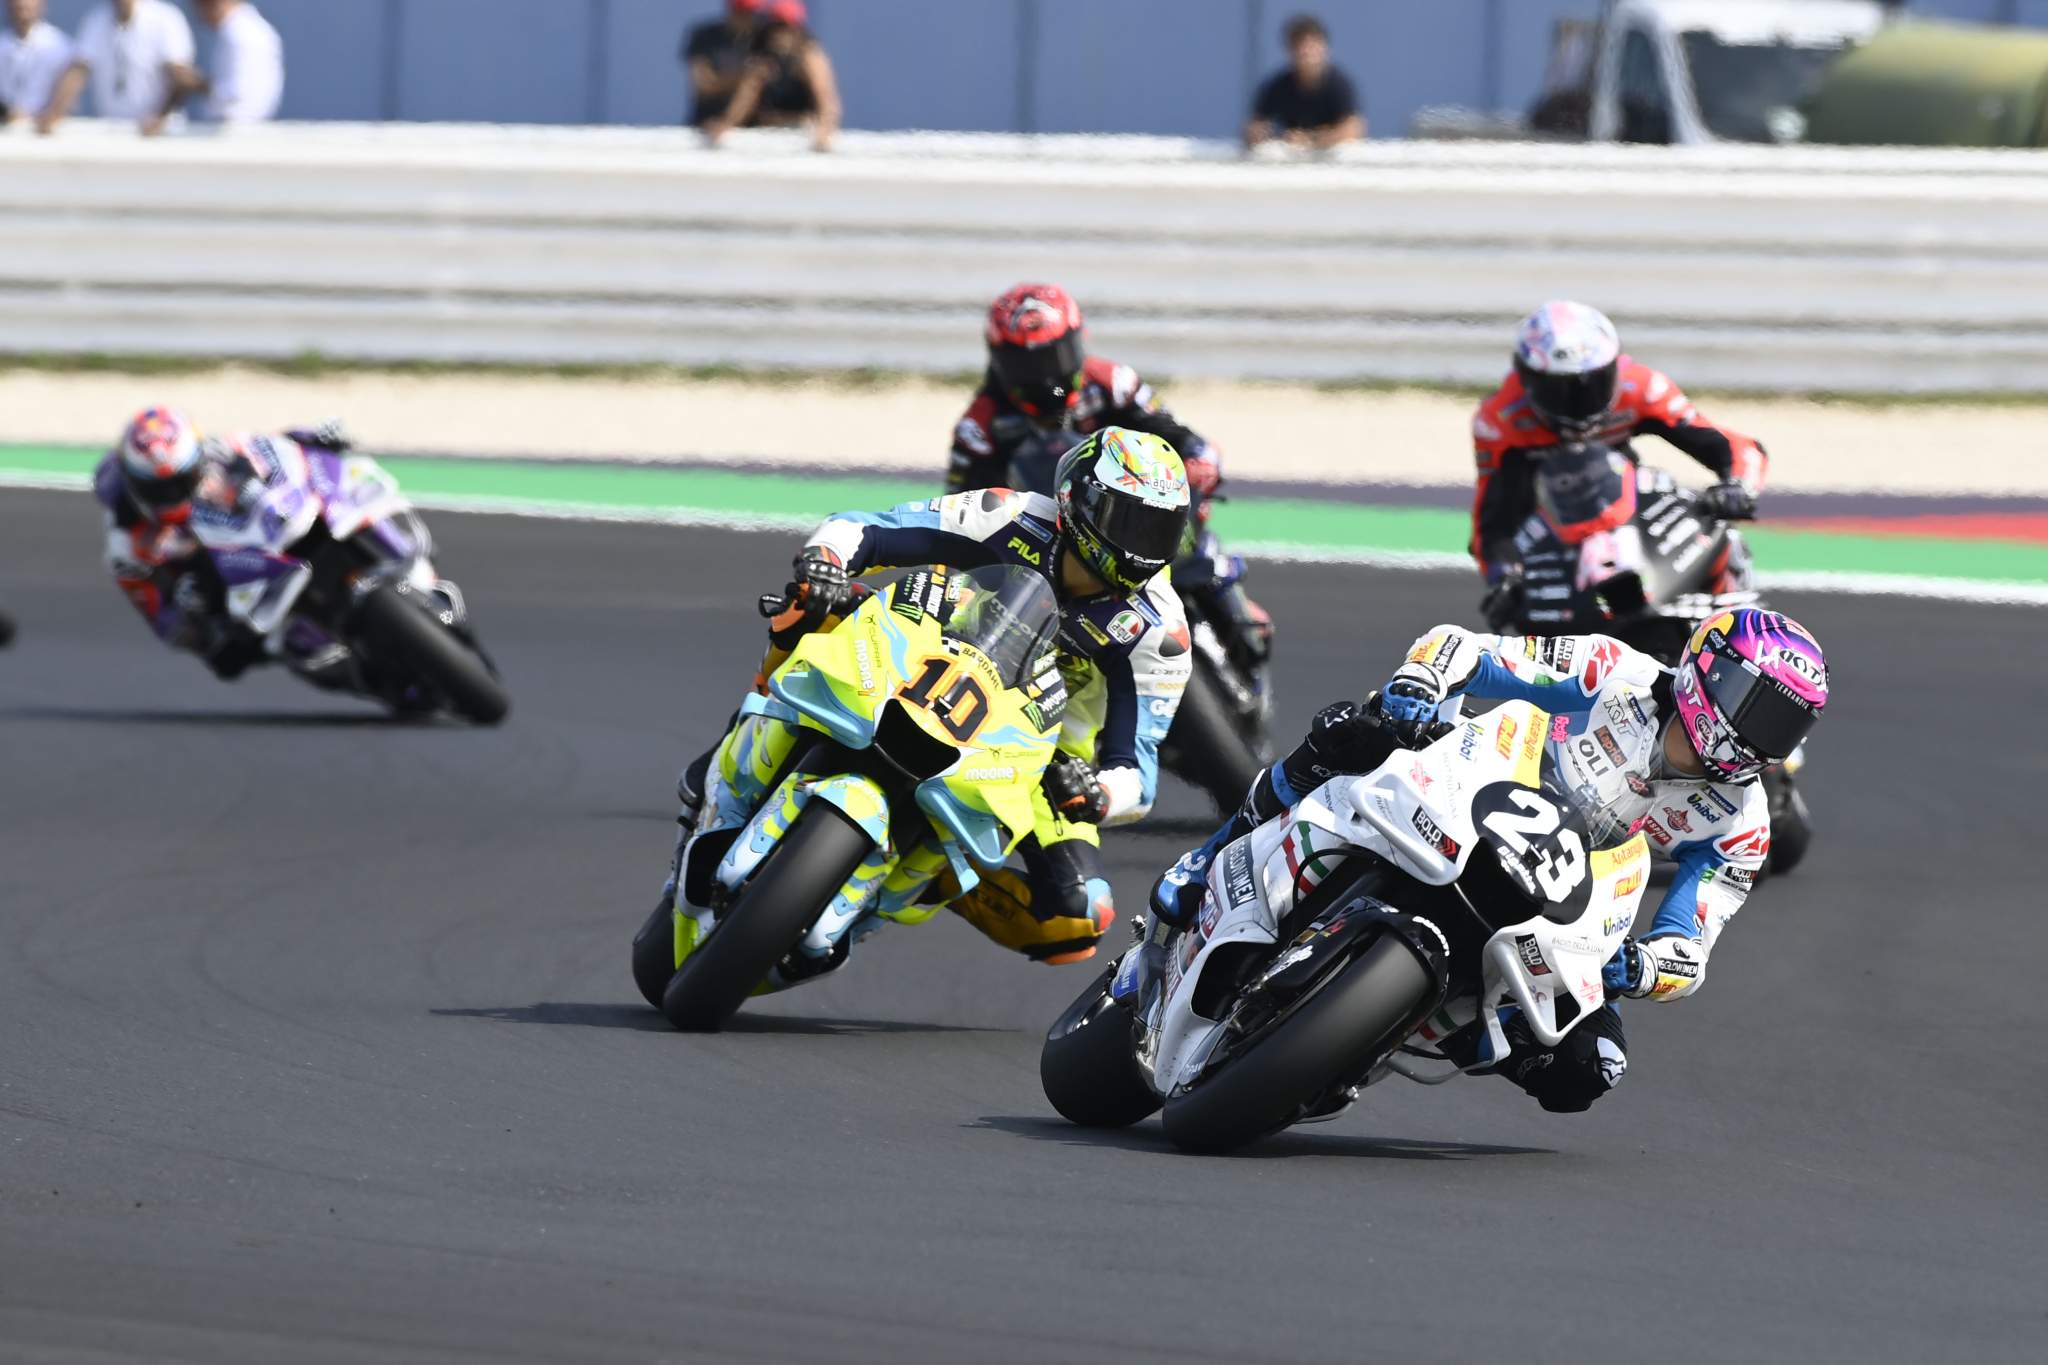 San Marino Grand Prix Motogp 2022 Rider Ratings The Race 6554